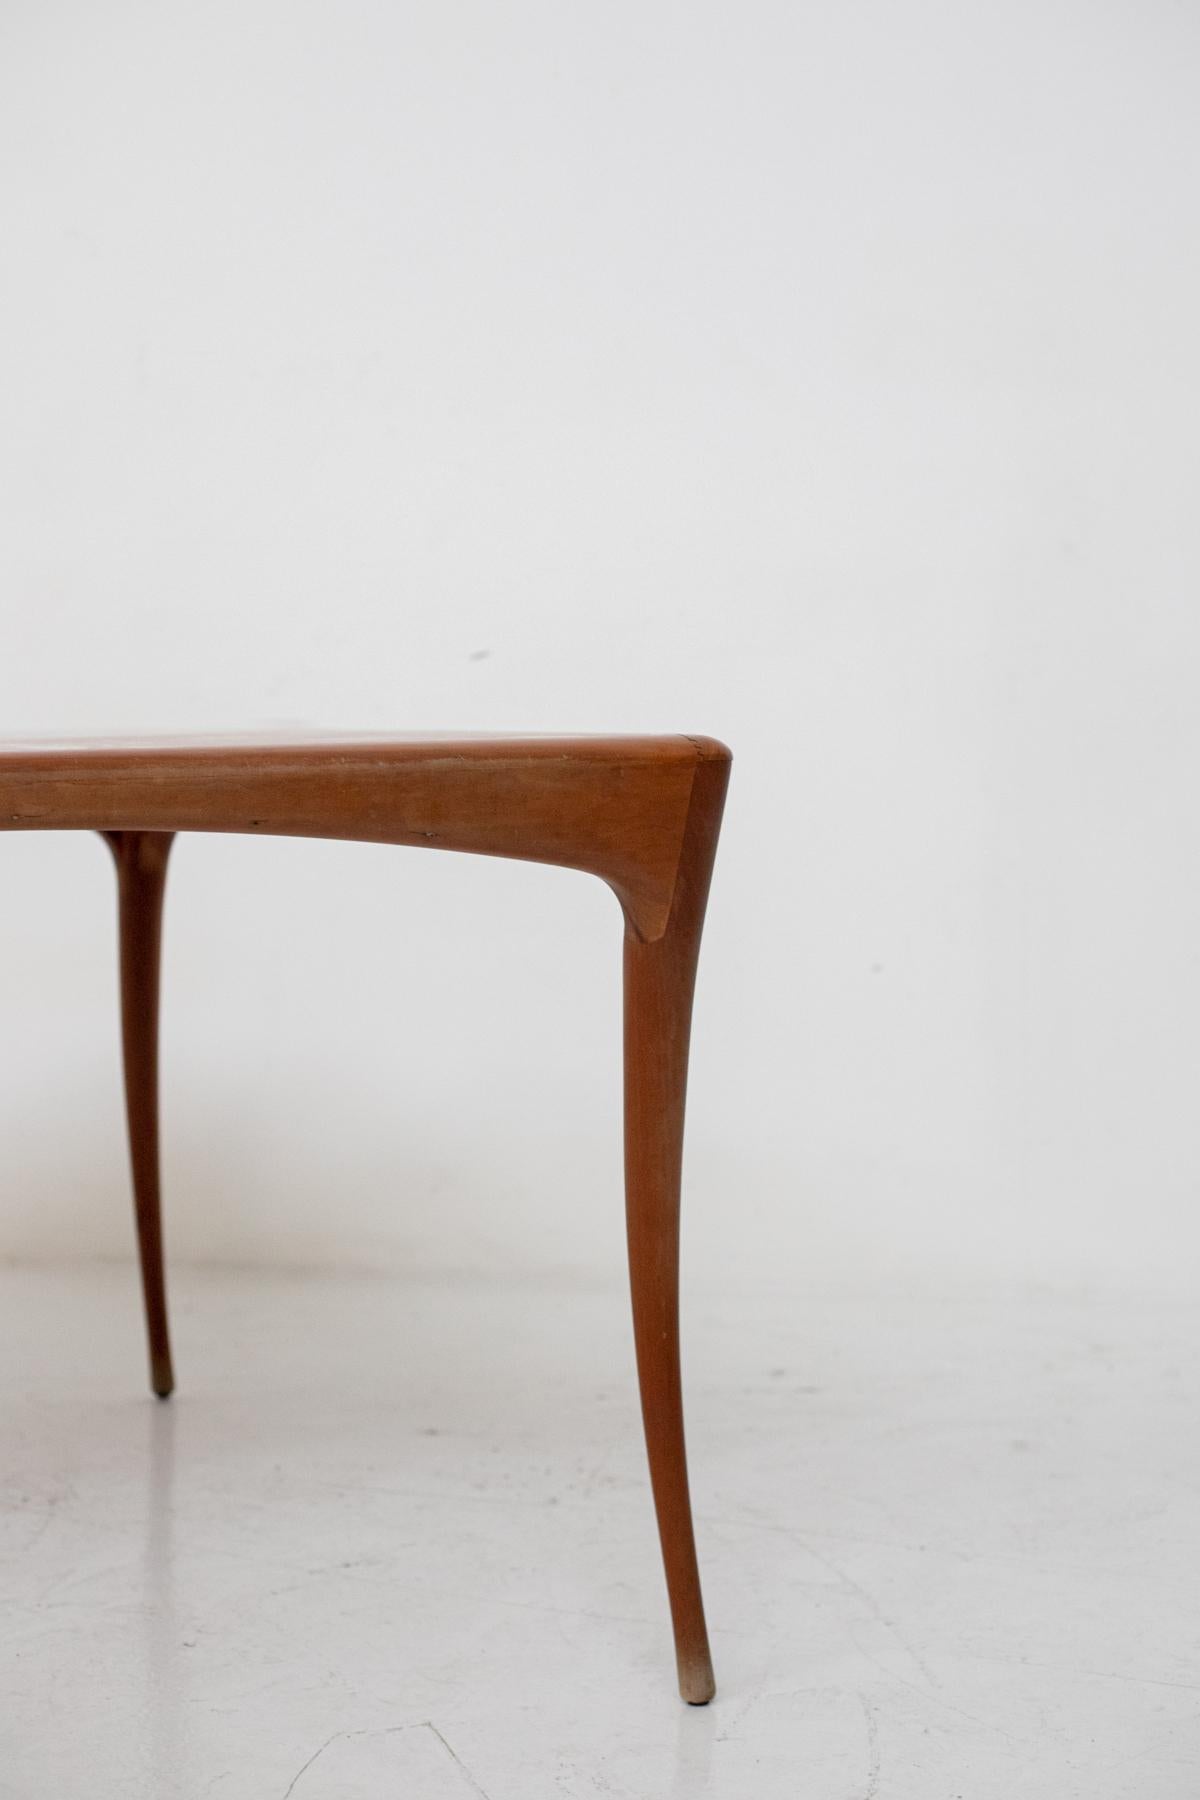 Wood Roberto Lazzeroni Vintage Table mod. 